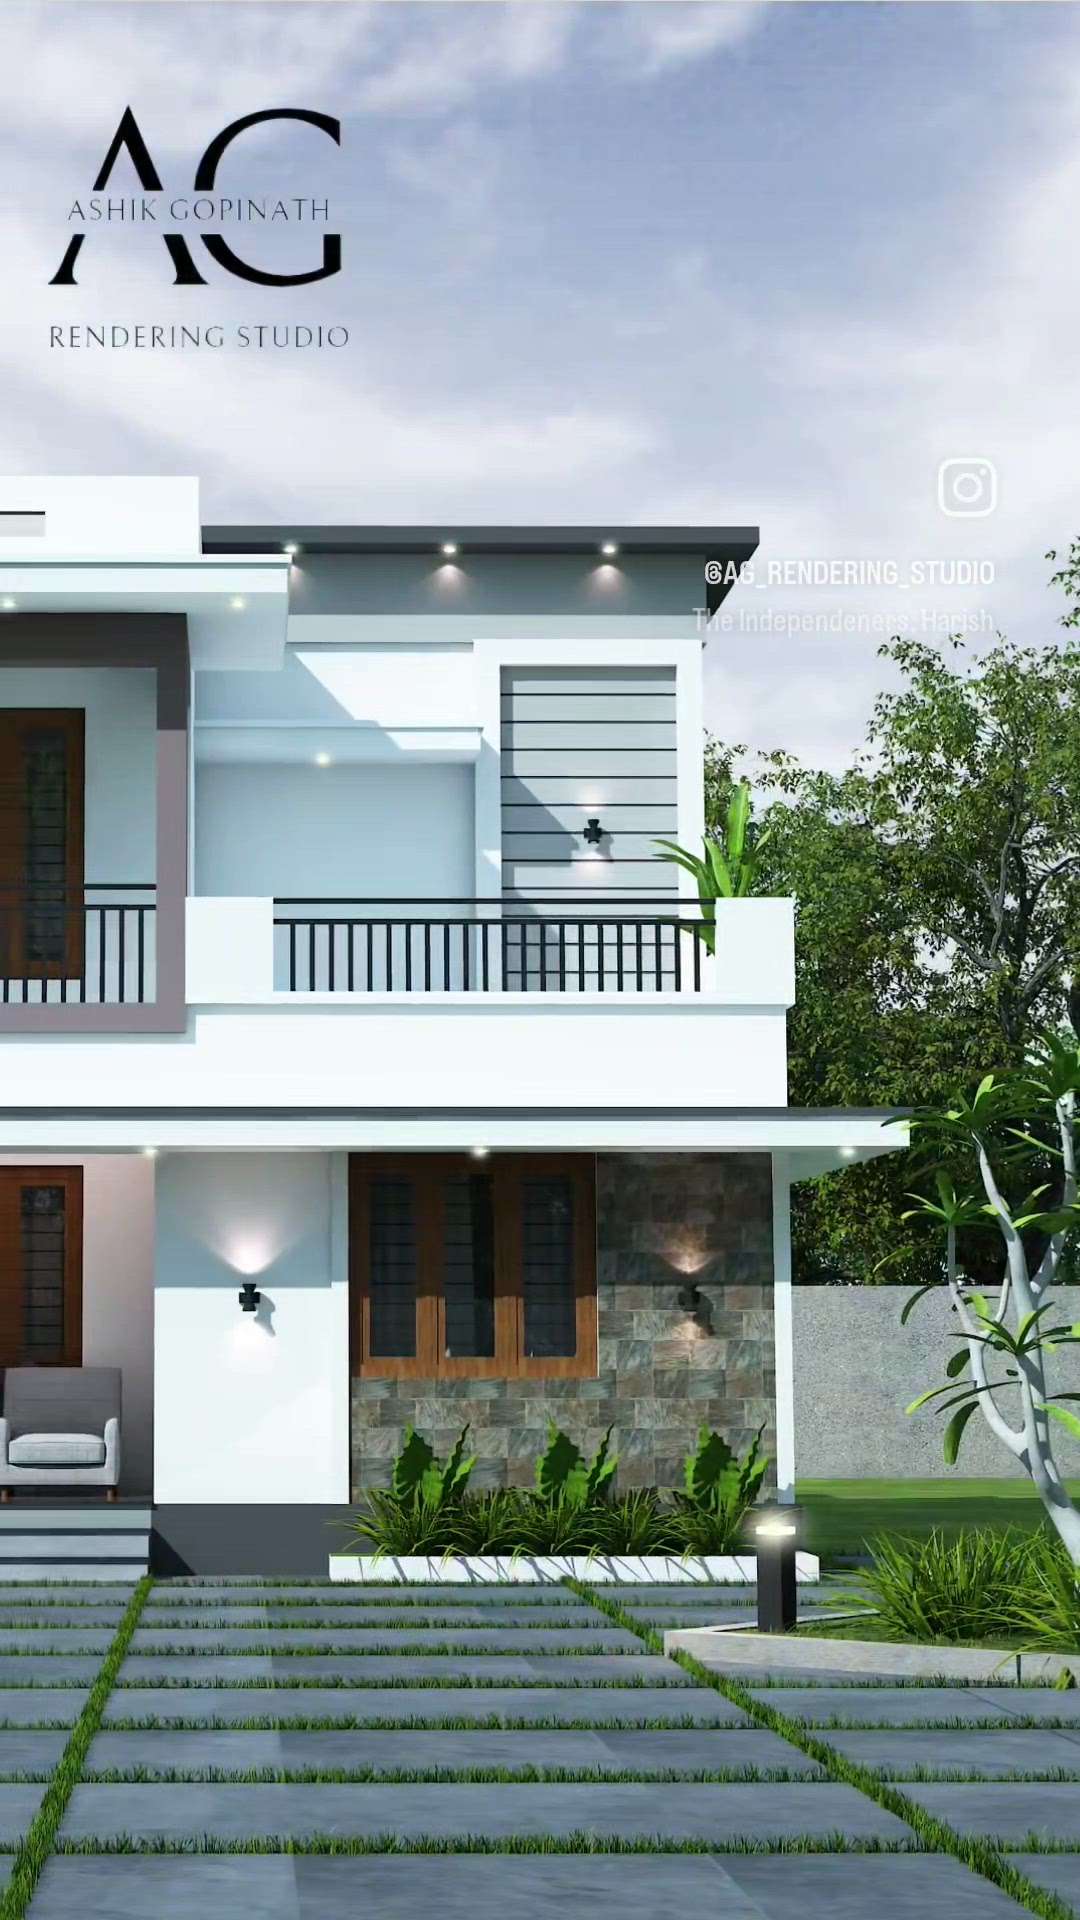 1500 Sqft Budget Design 🏠❤️
#keralahomeplans #keralahomedesignz #keralahomeplans #keralaarchitectures #keraladesigns #home3ddesigns #HouseDesigns #lowbudget #exteriordesigns